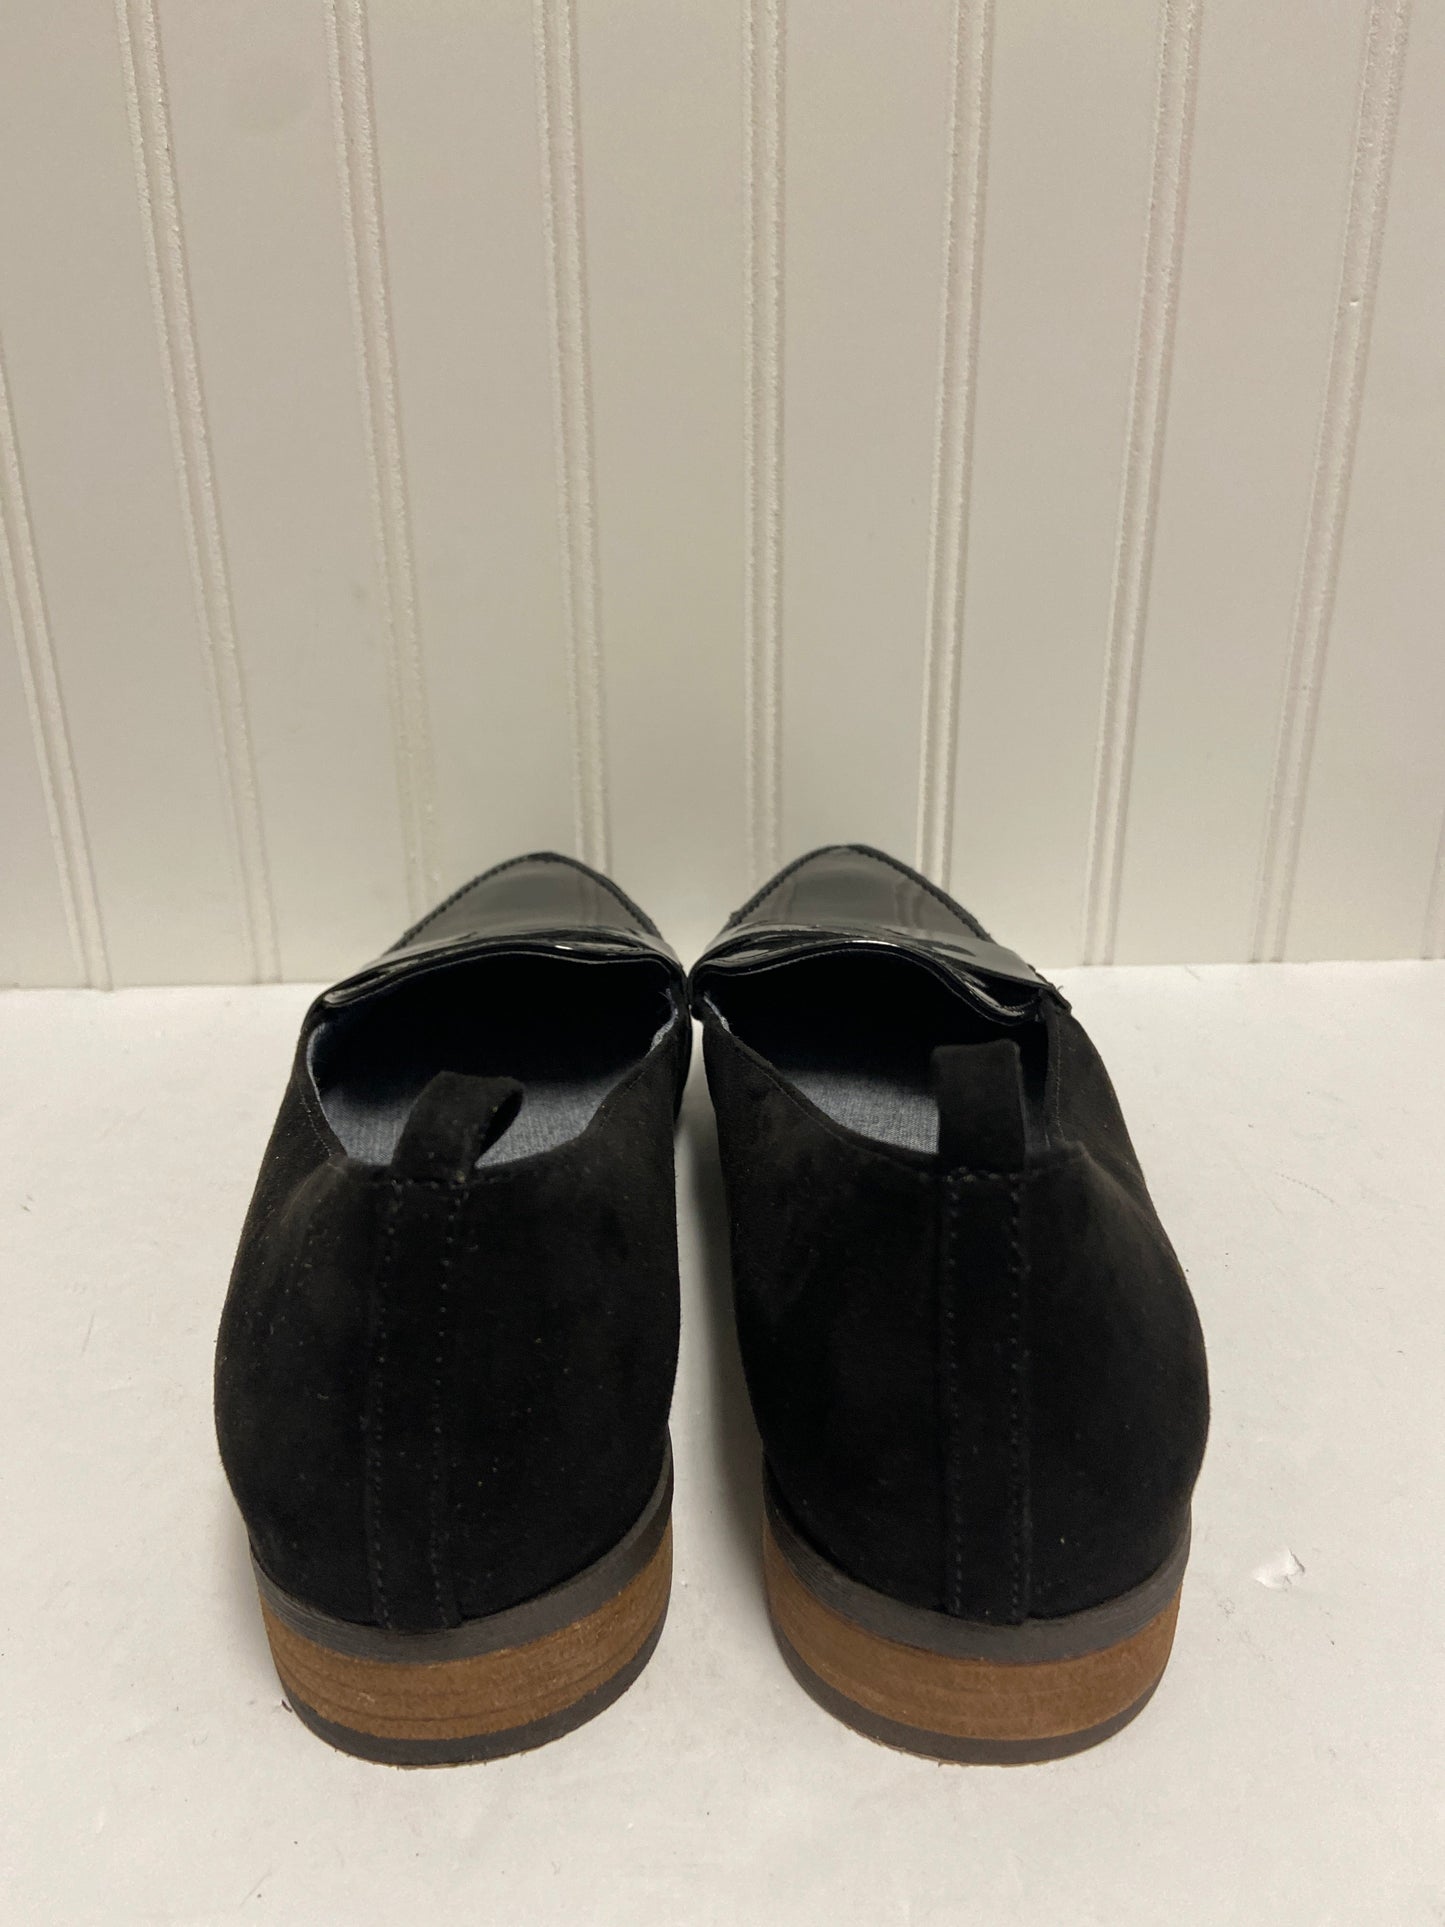 Shoes Flats By Dr Scholls  Size: 8.5